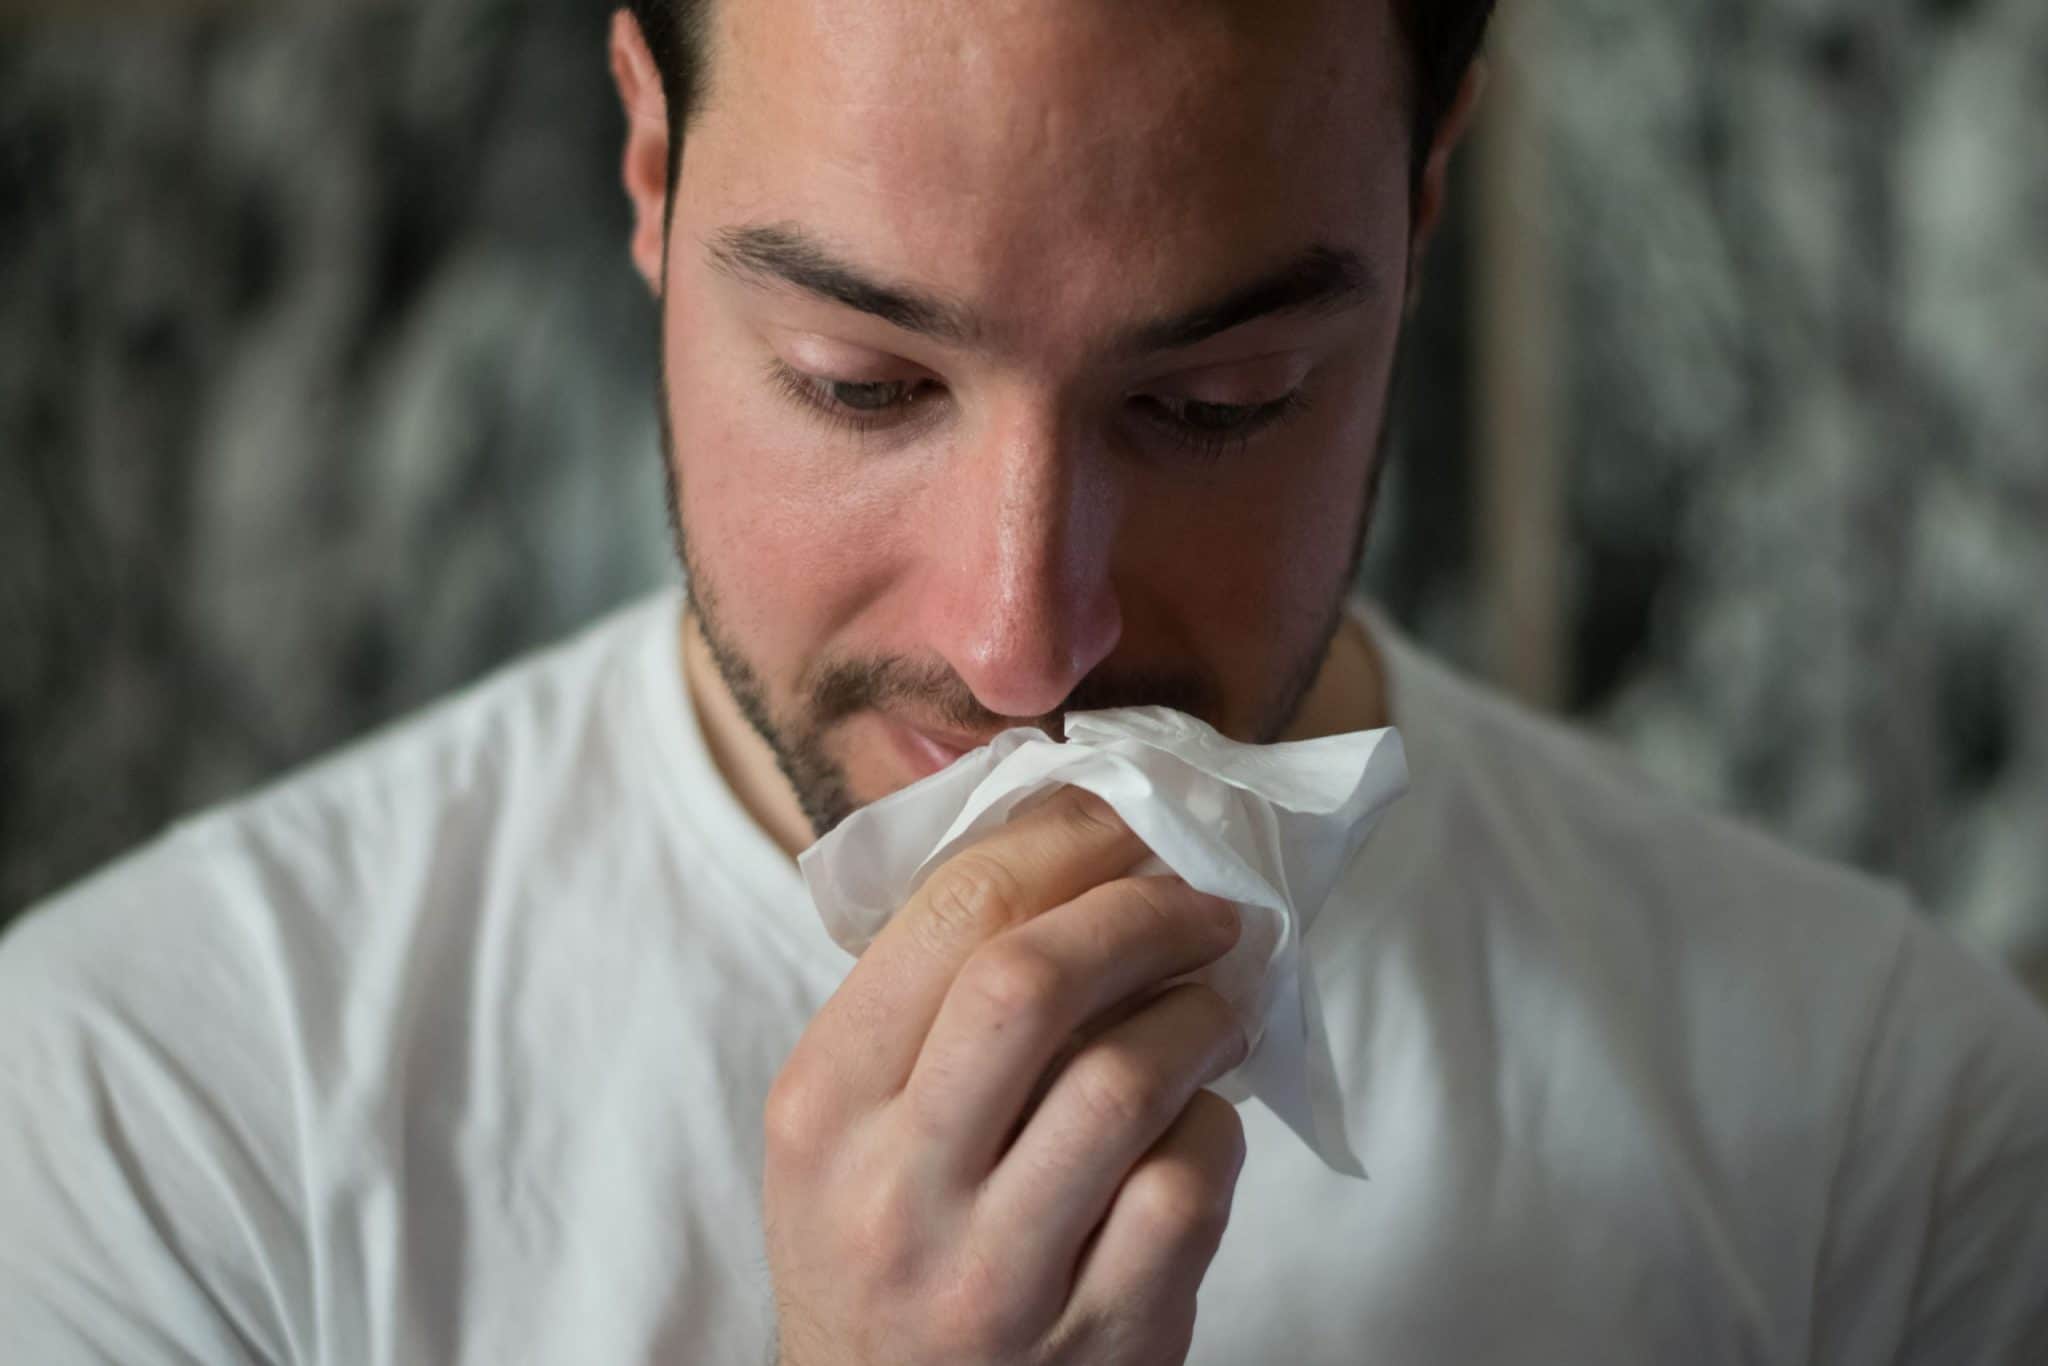 Man sneezing into a tissue